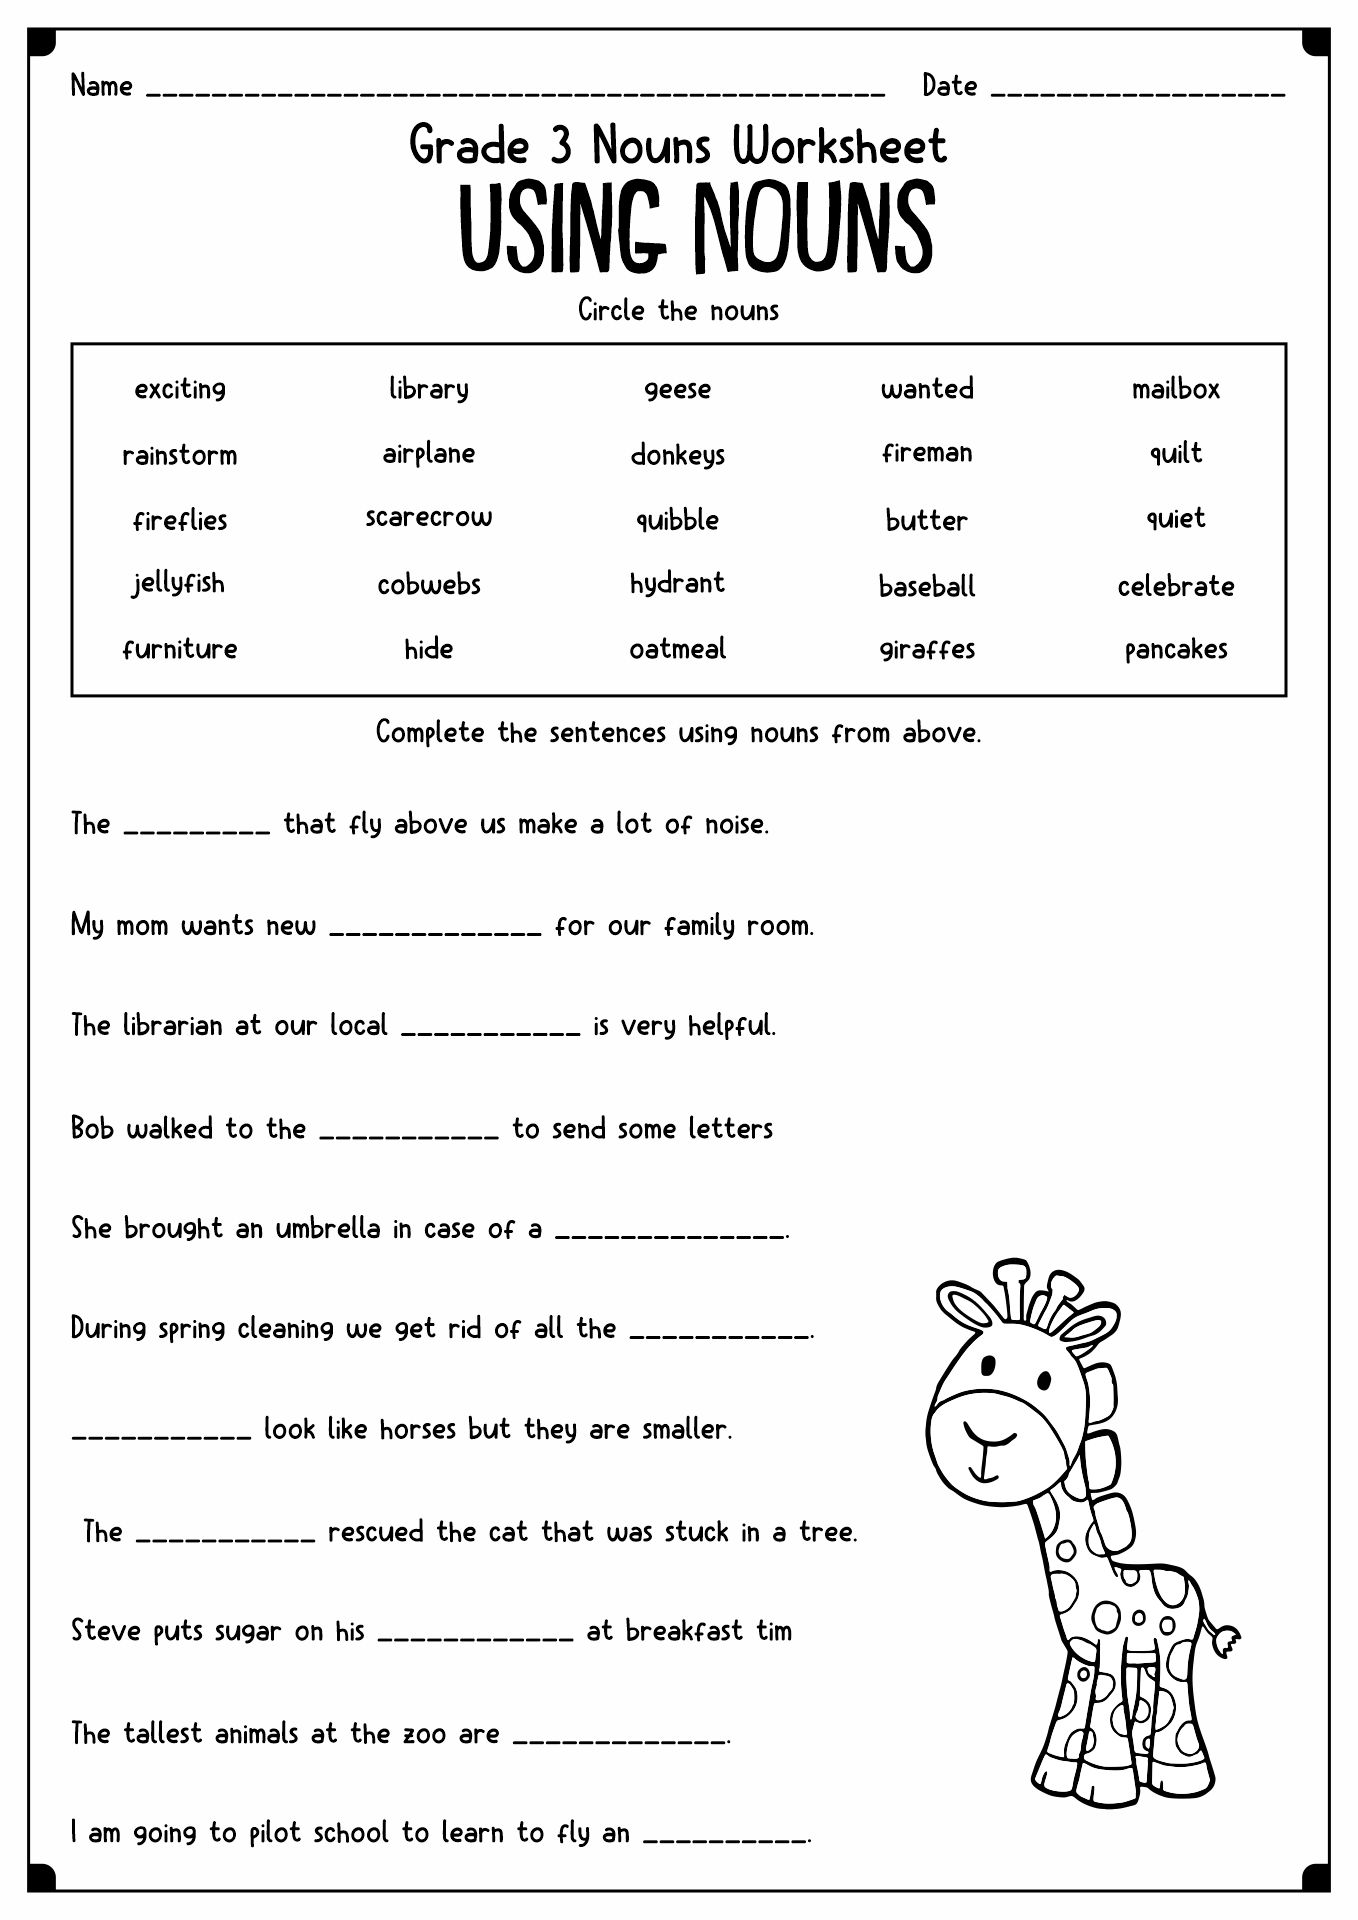 Nouns Worksheets 3rd Grade Vocabulary Image